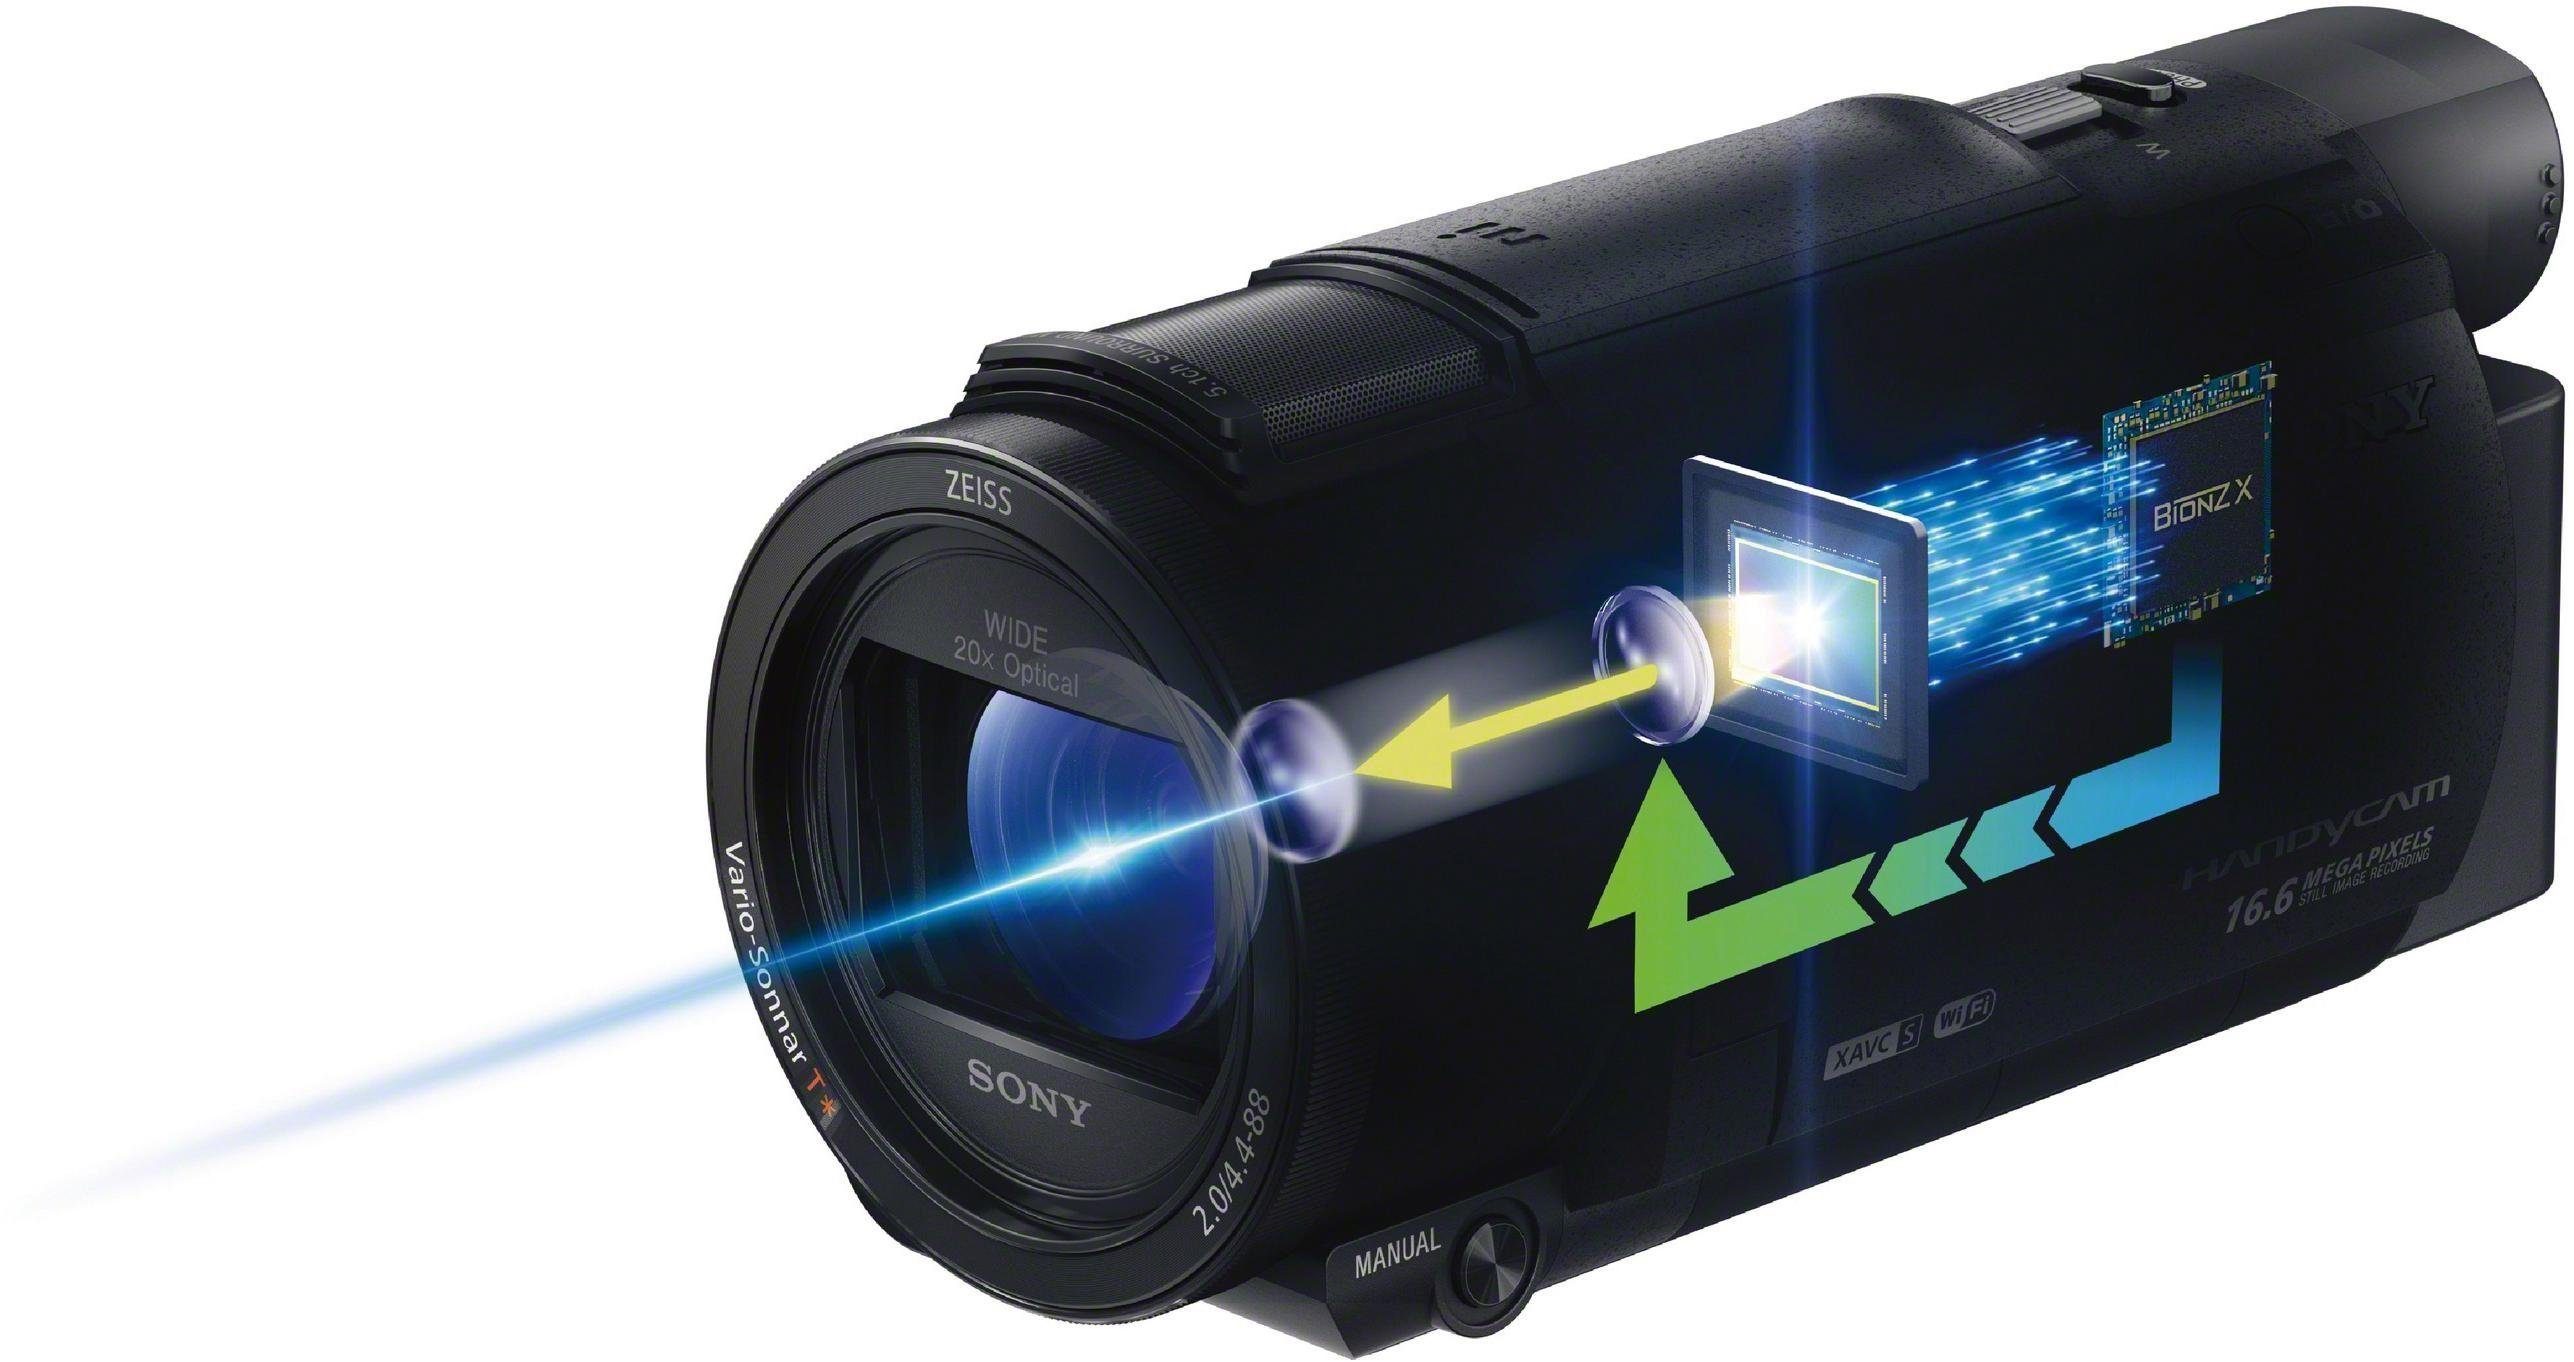 Camcorder FDRAX53.CEN Ultra (Wi-Fi), 20x Sony Zoom) opt. NFC, (4K WLAN HD,